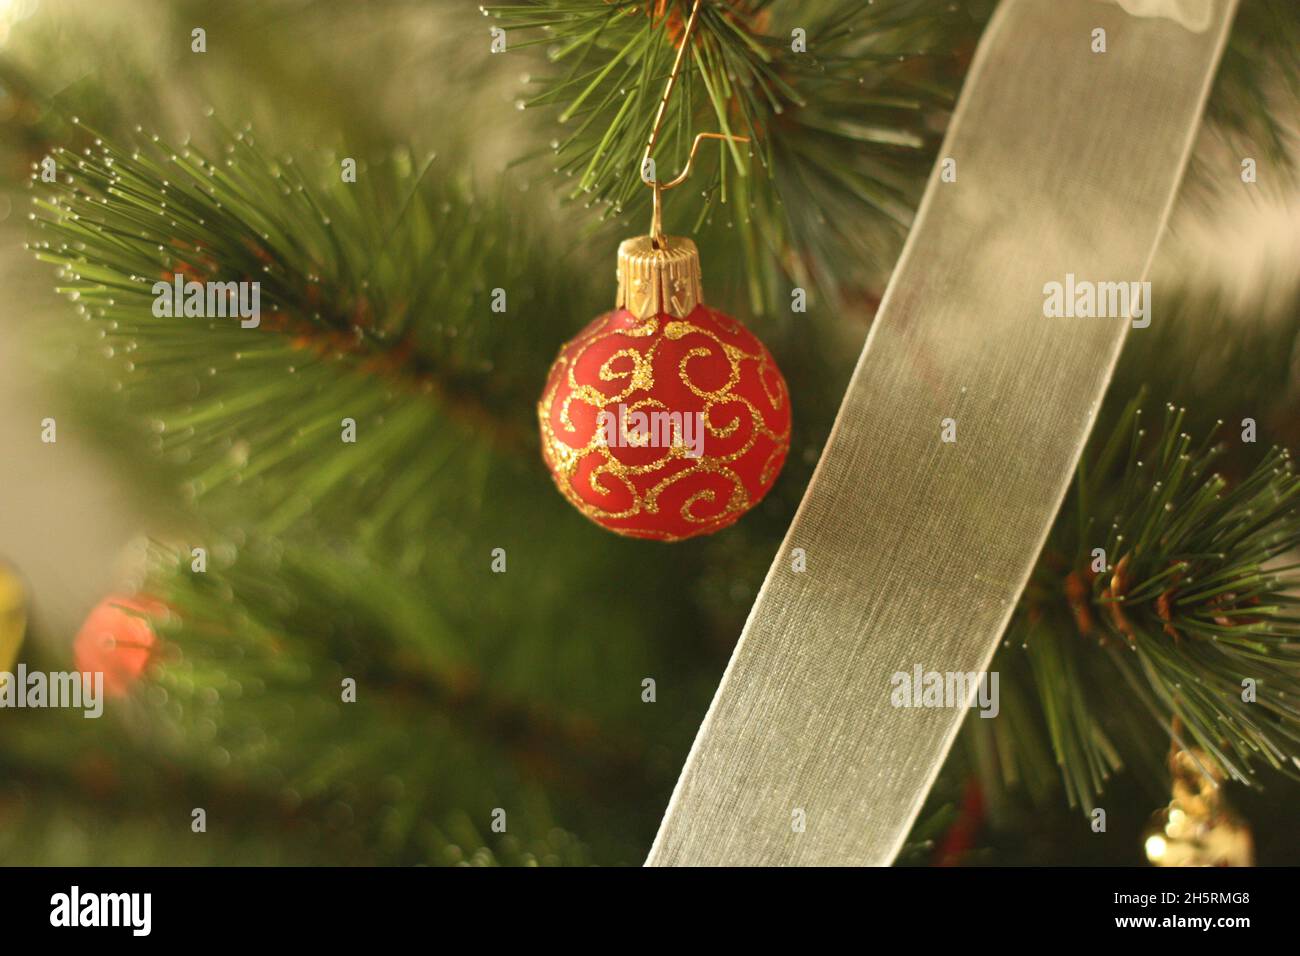 Christmas pine tree decorations Stock Photo